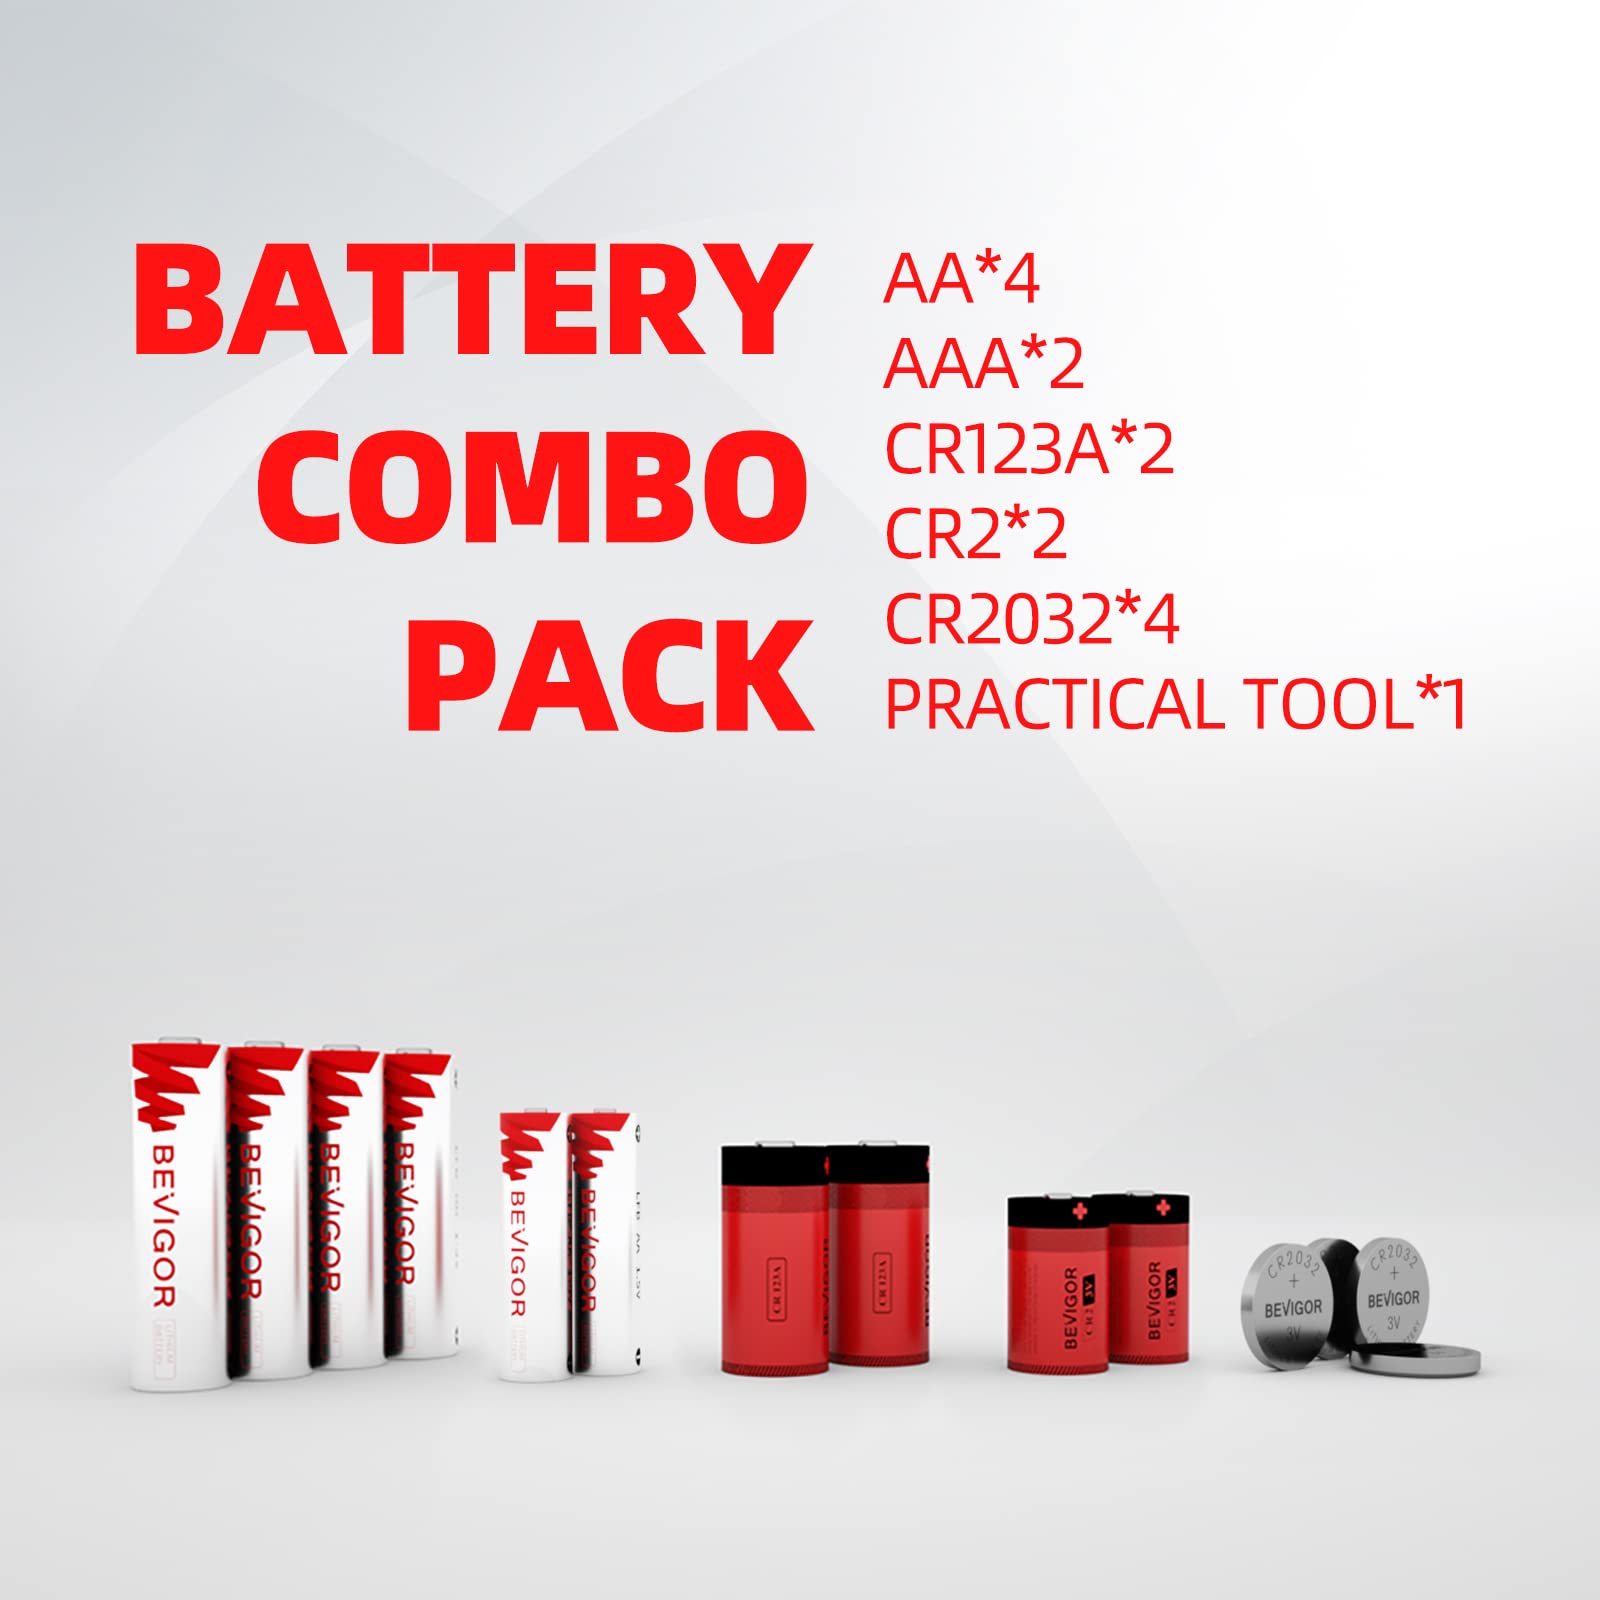 Basics Lithium CR2 3 Volt Batteries - 4 Count (Pack of 1) 4 CR2